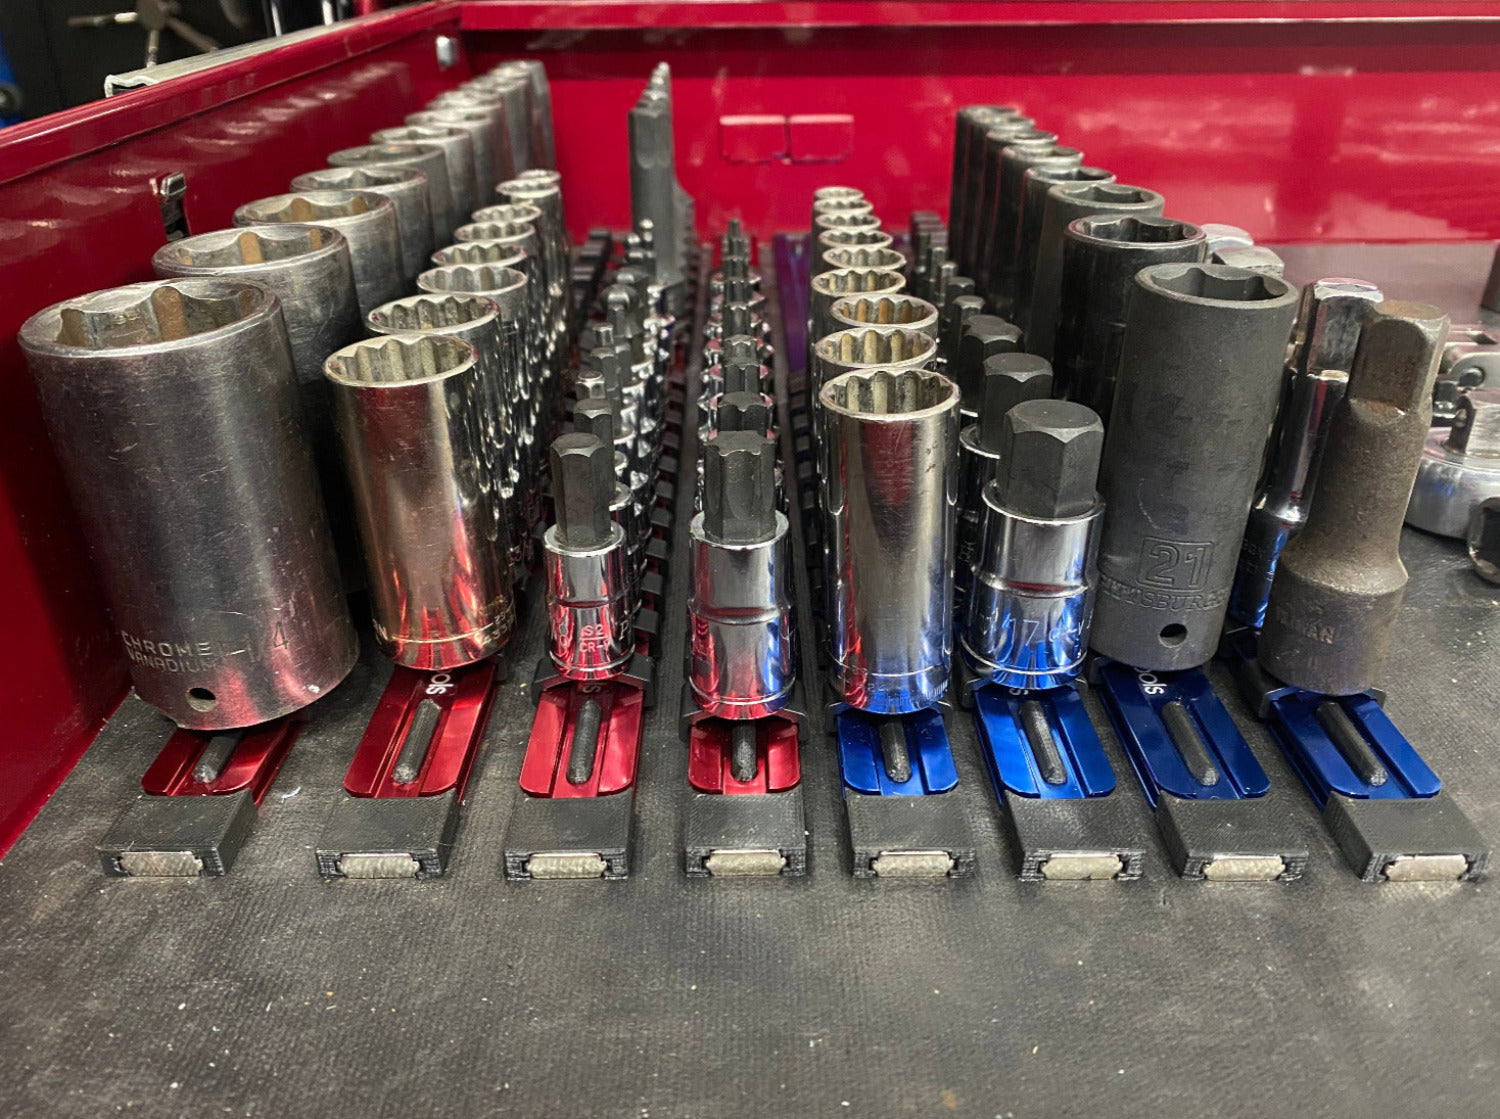 Magnetic Metal Wrench Organizers – Olsa Tools